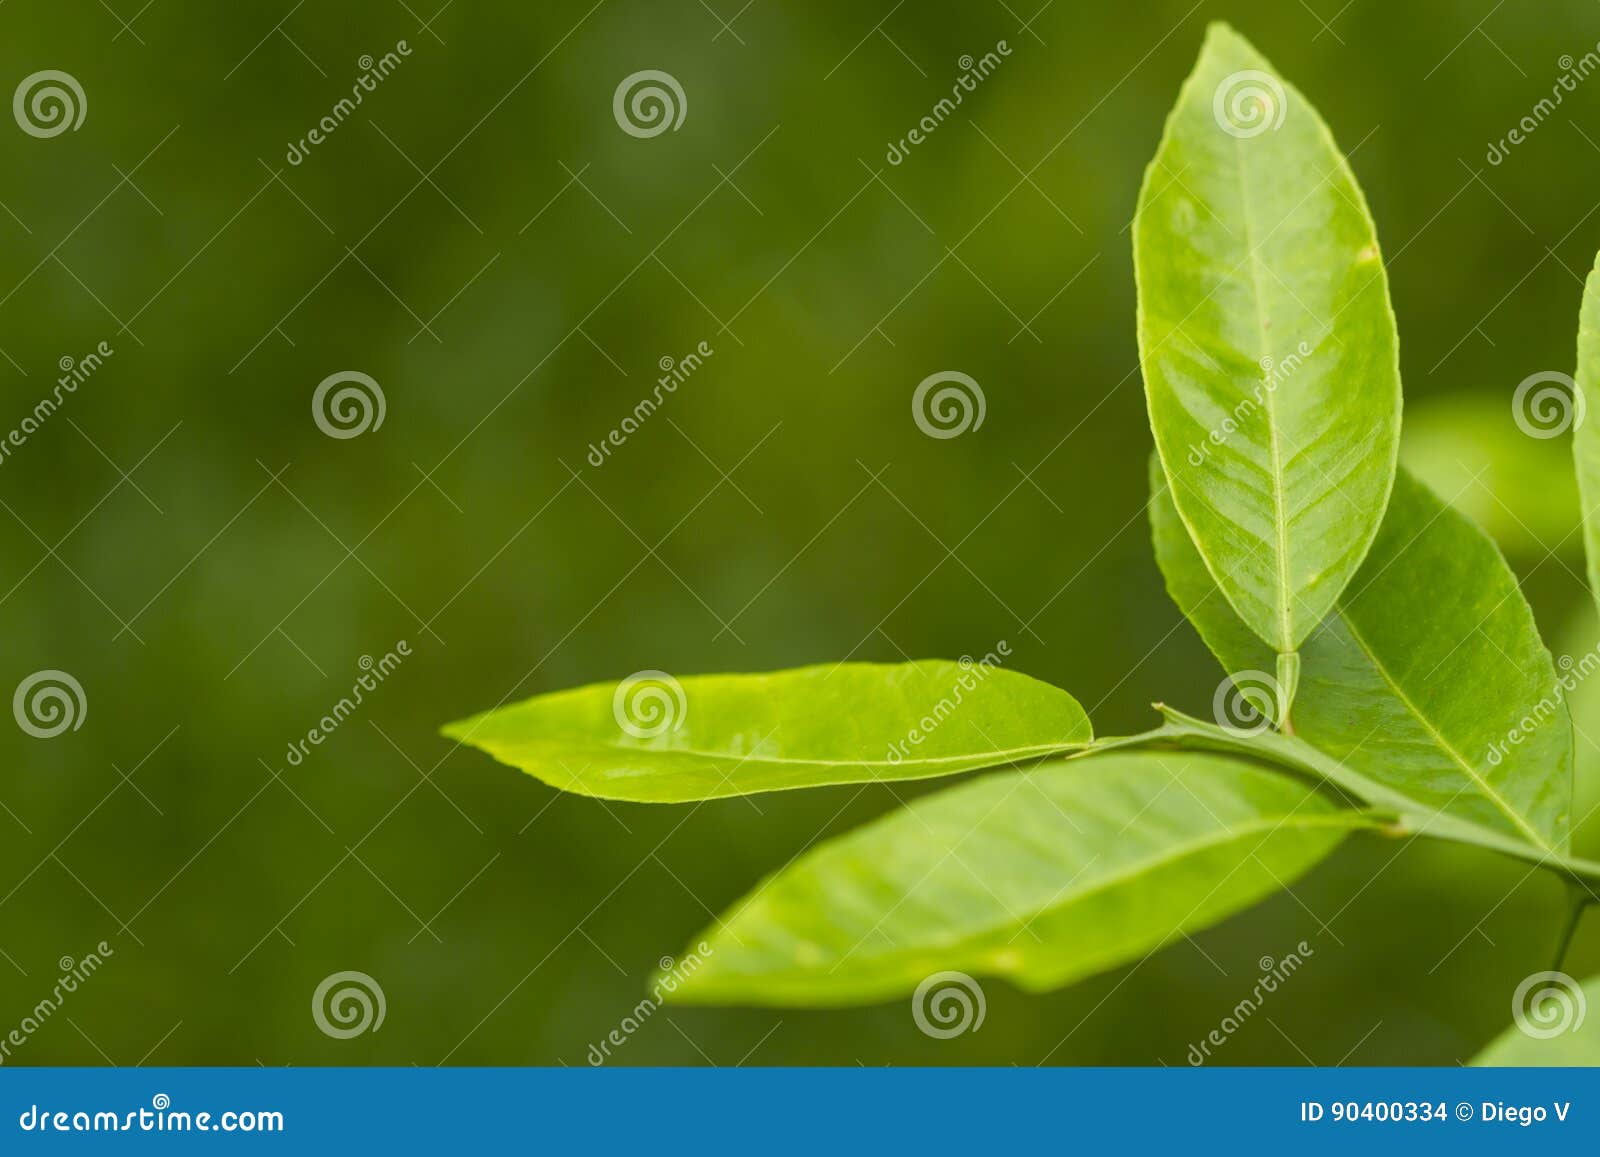 lemon leaves - limÃÂ£o e suas folhas